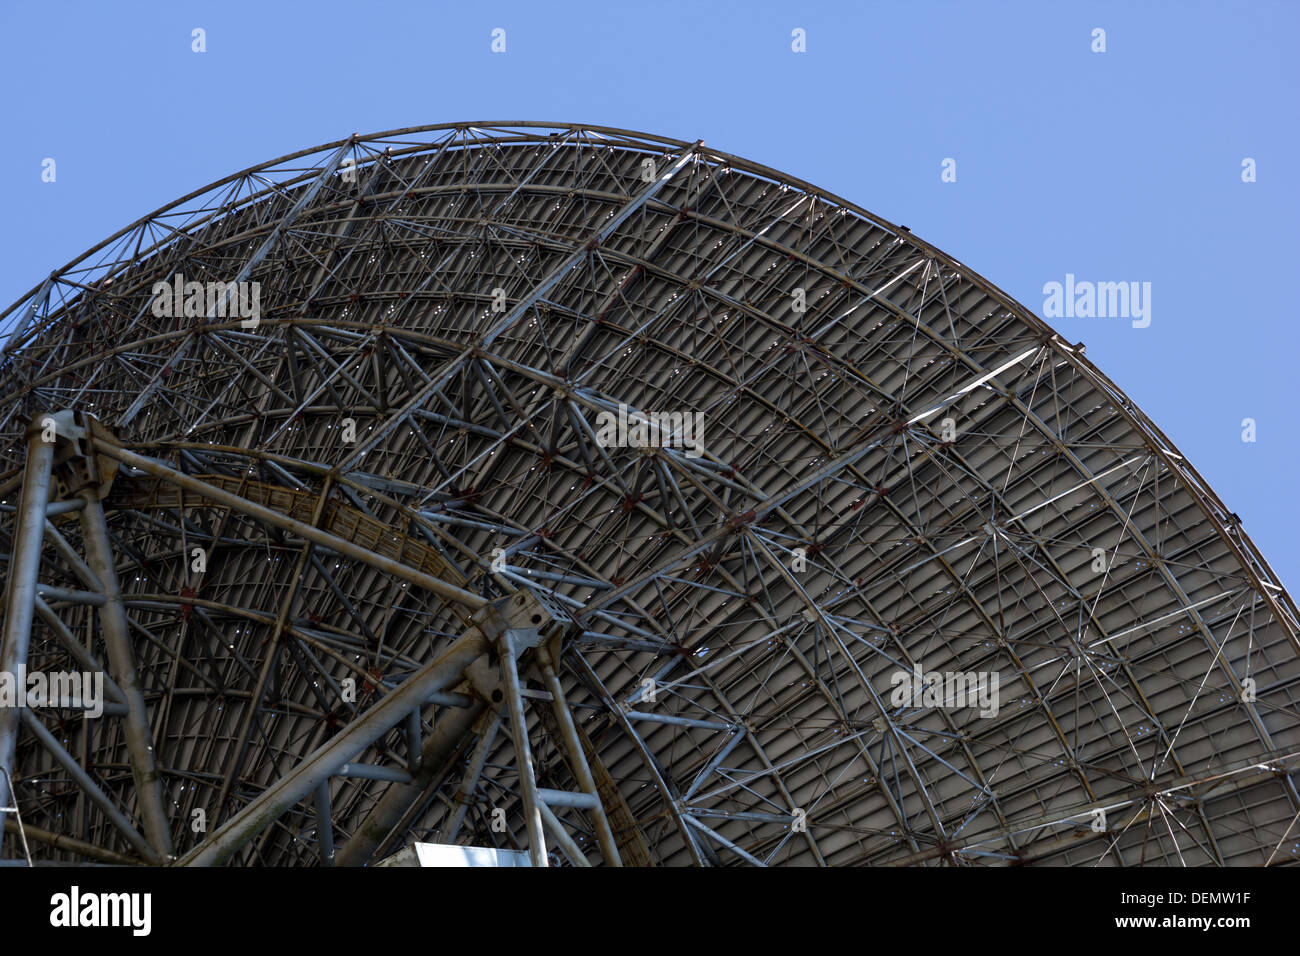 large radio telescope antenna on blue sky Stock Photo